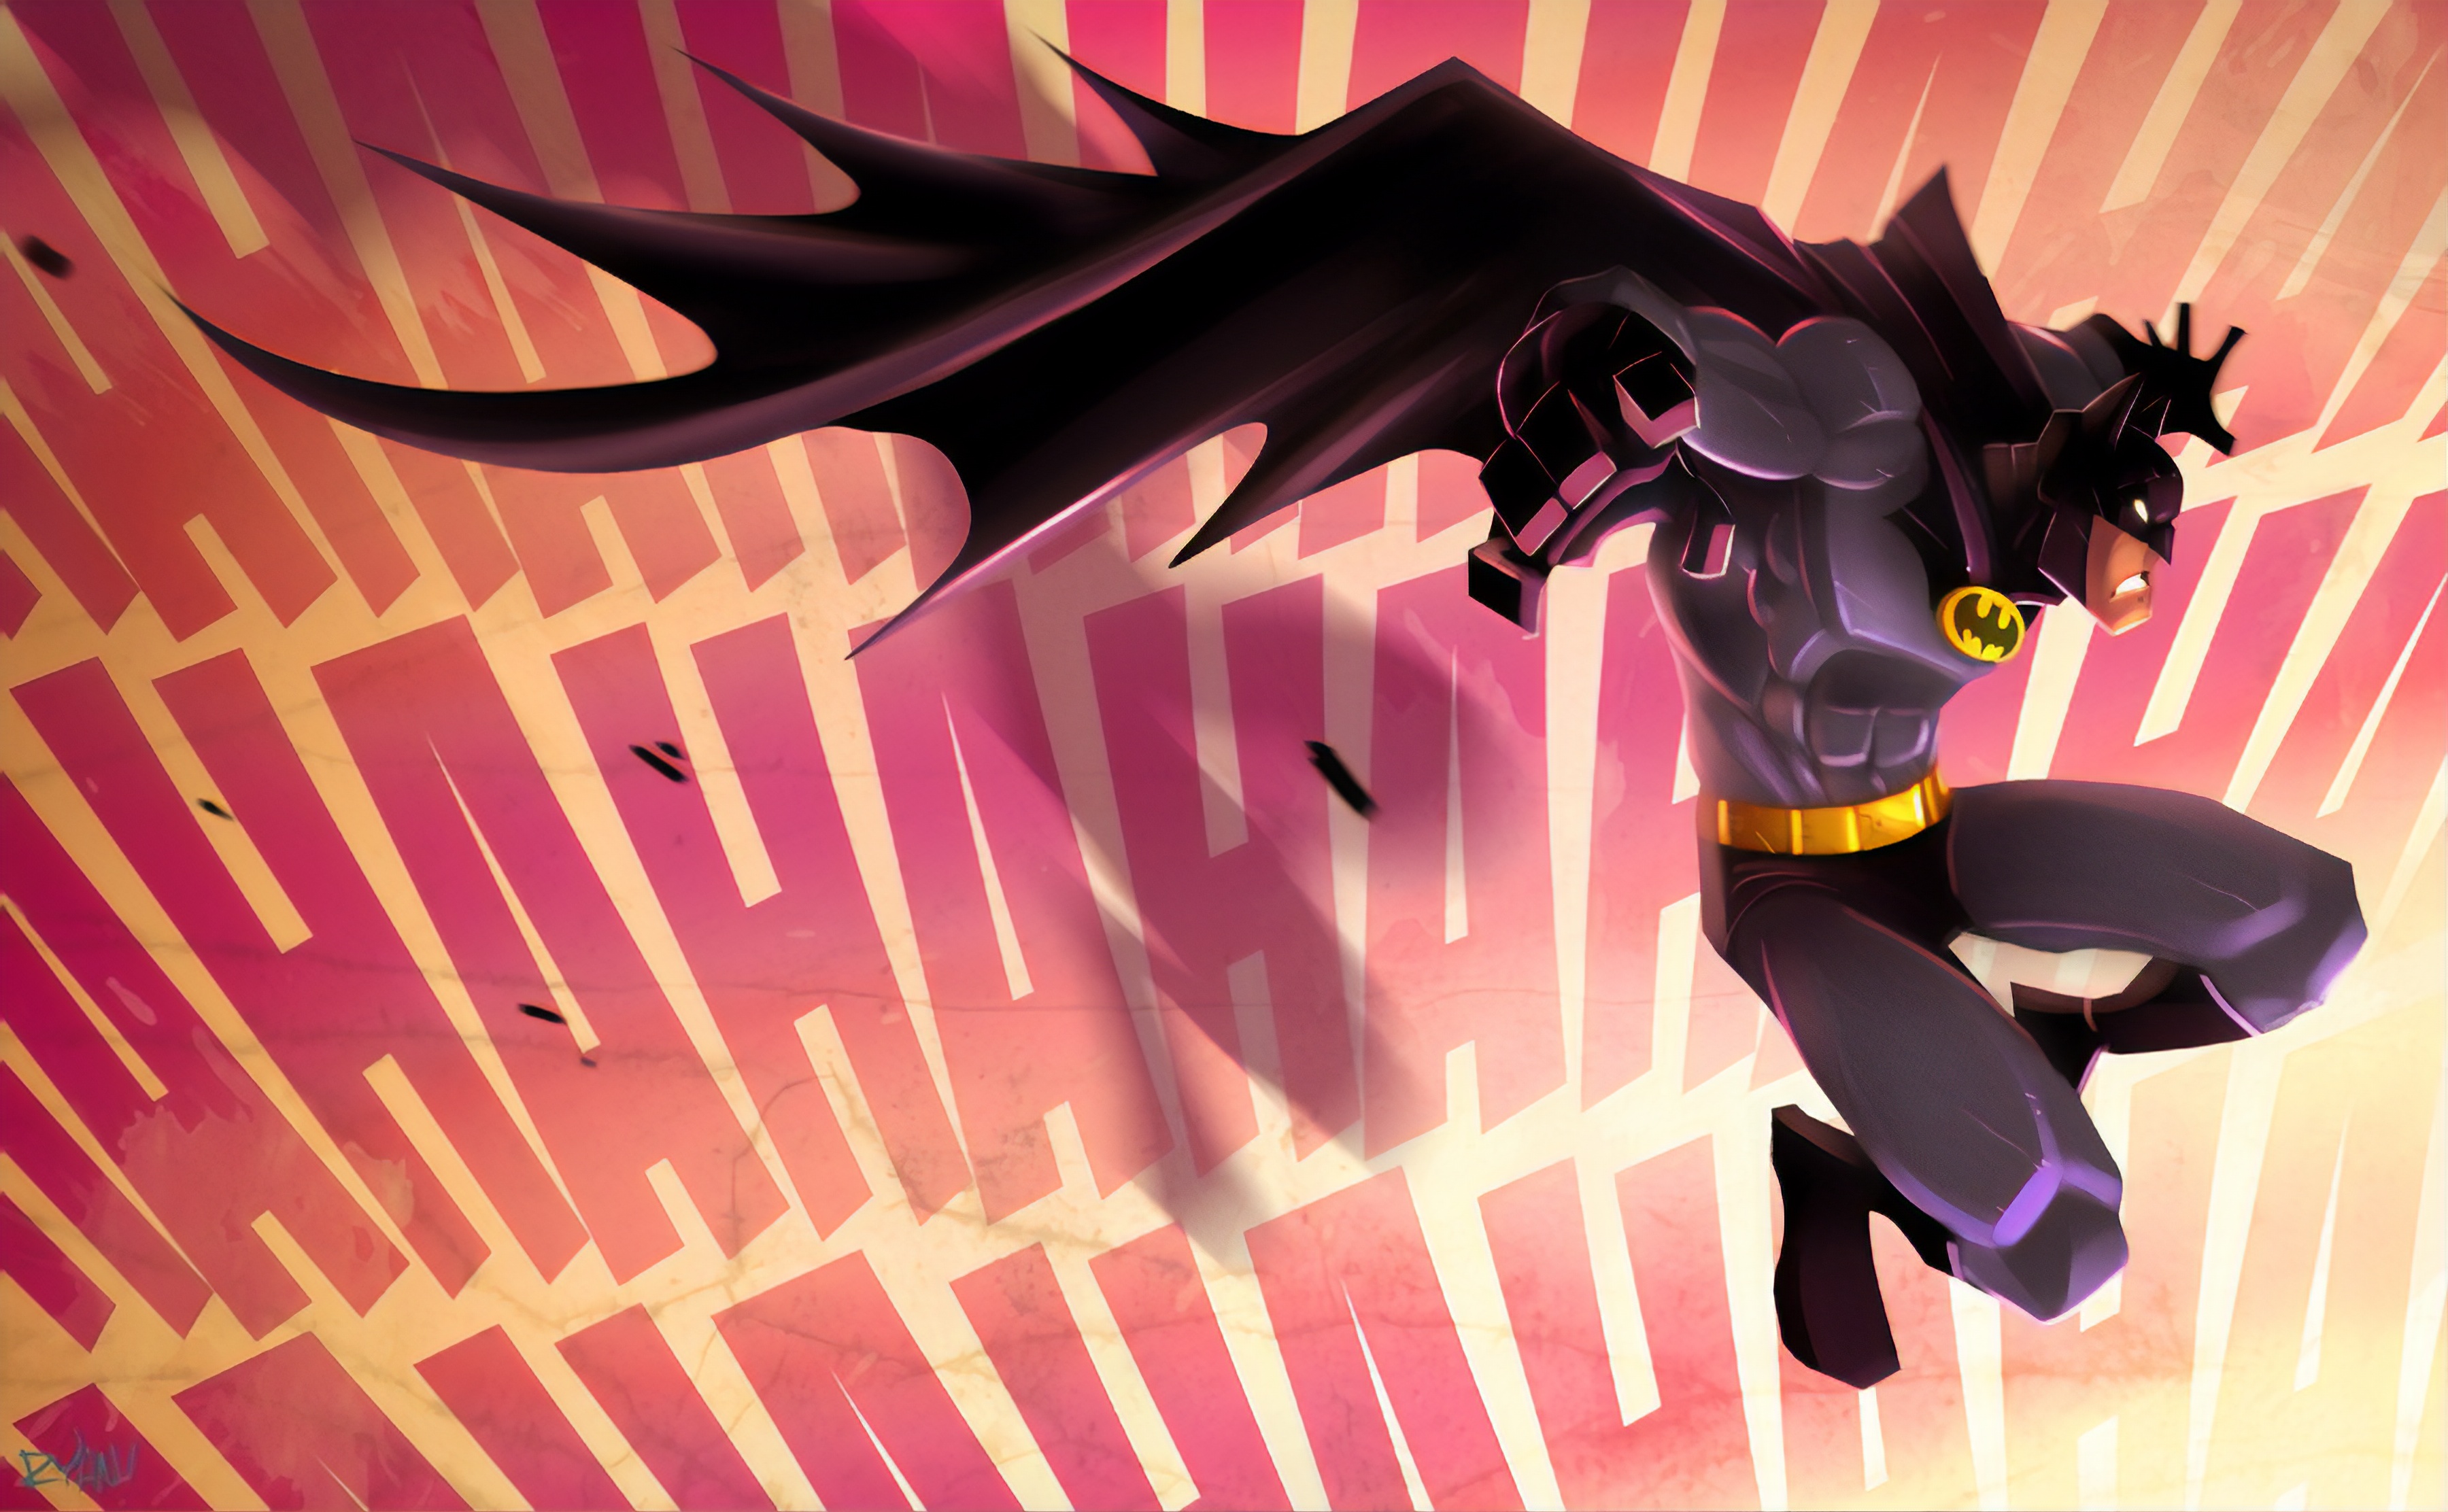 Download Cool Batman Cartoon Pink Art Mobile Wallpaper